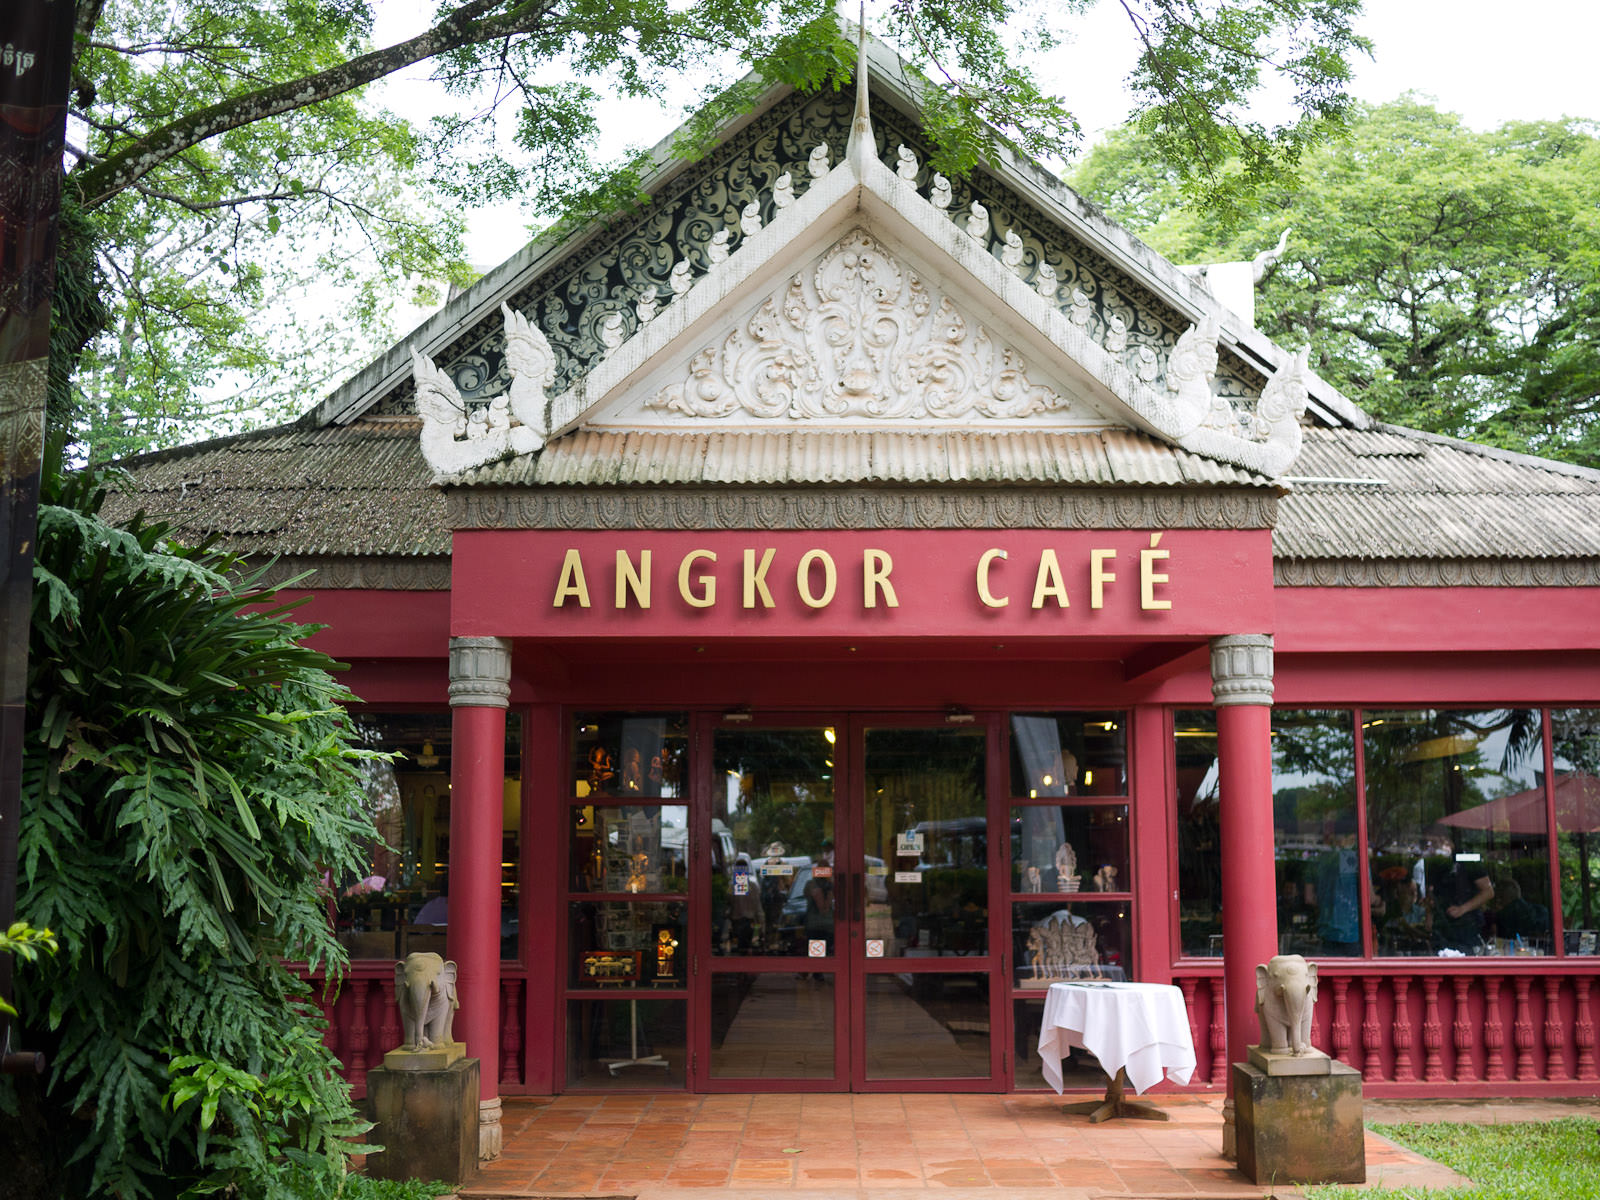 Angkor Cafe - entrance